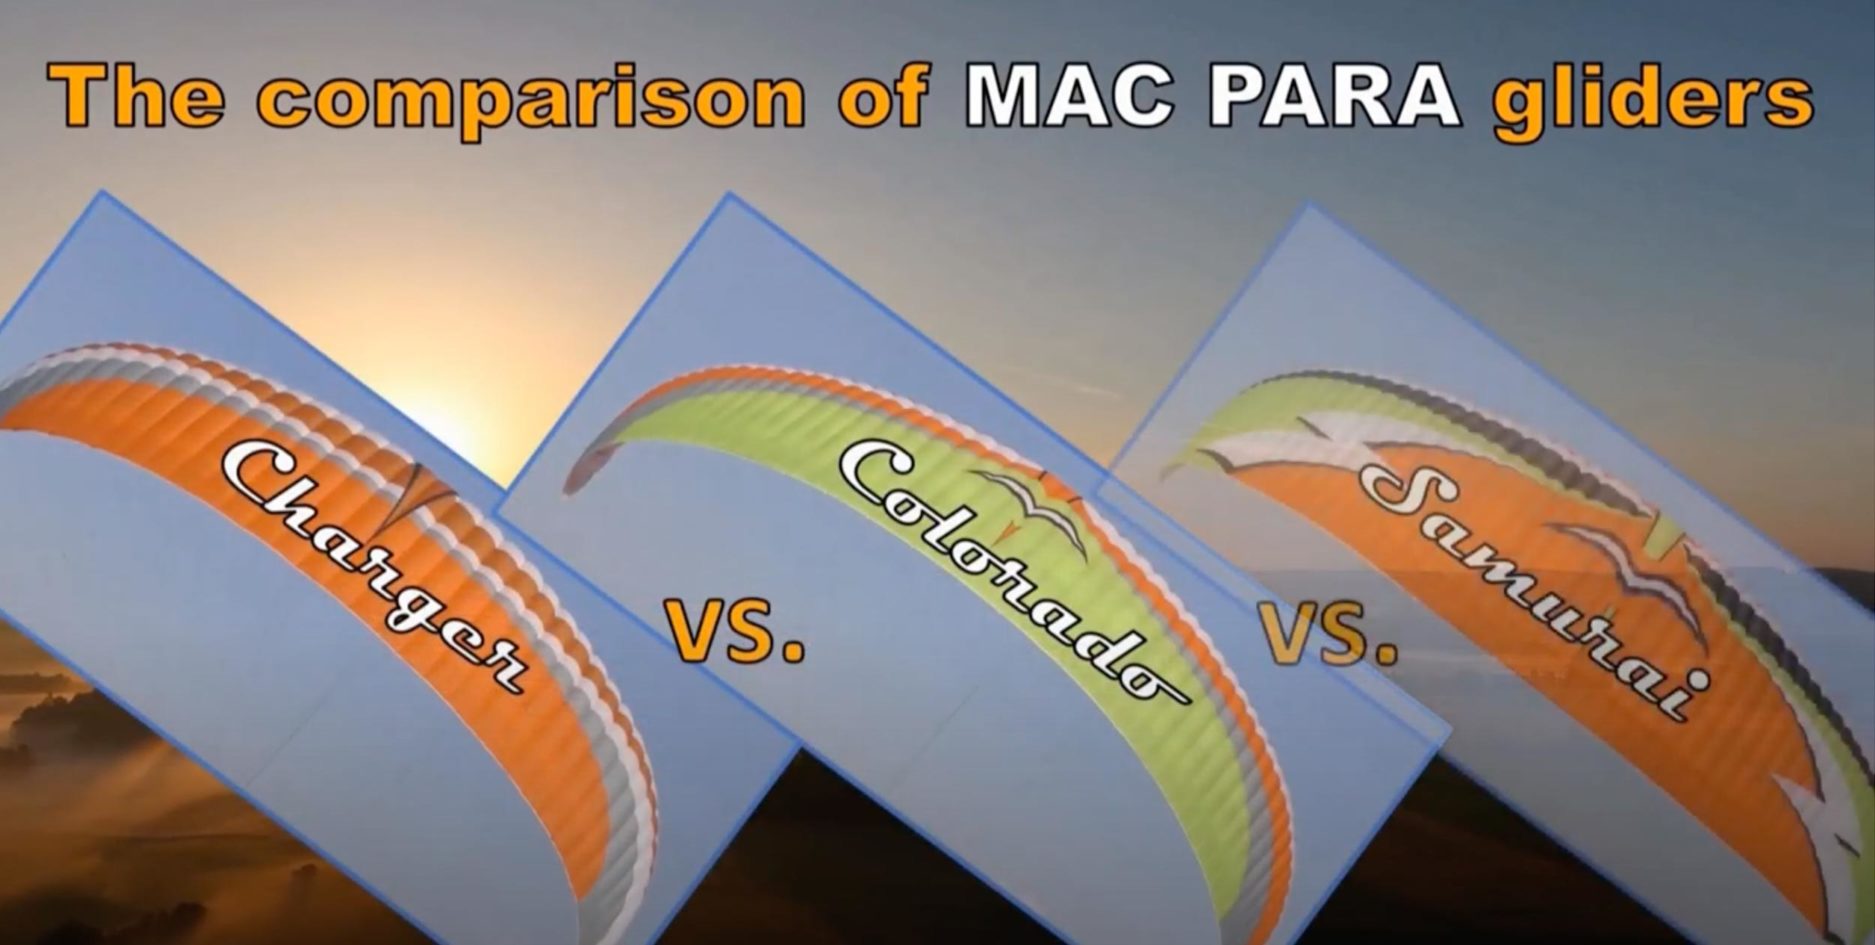 Mac Para PPG wings comparison video